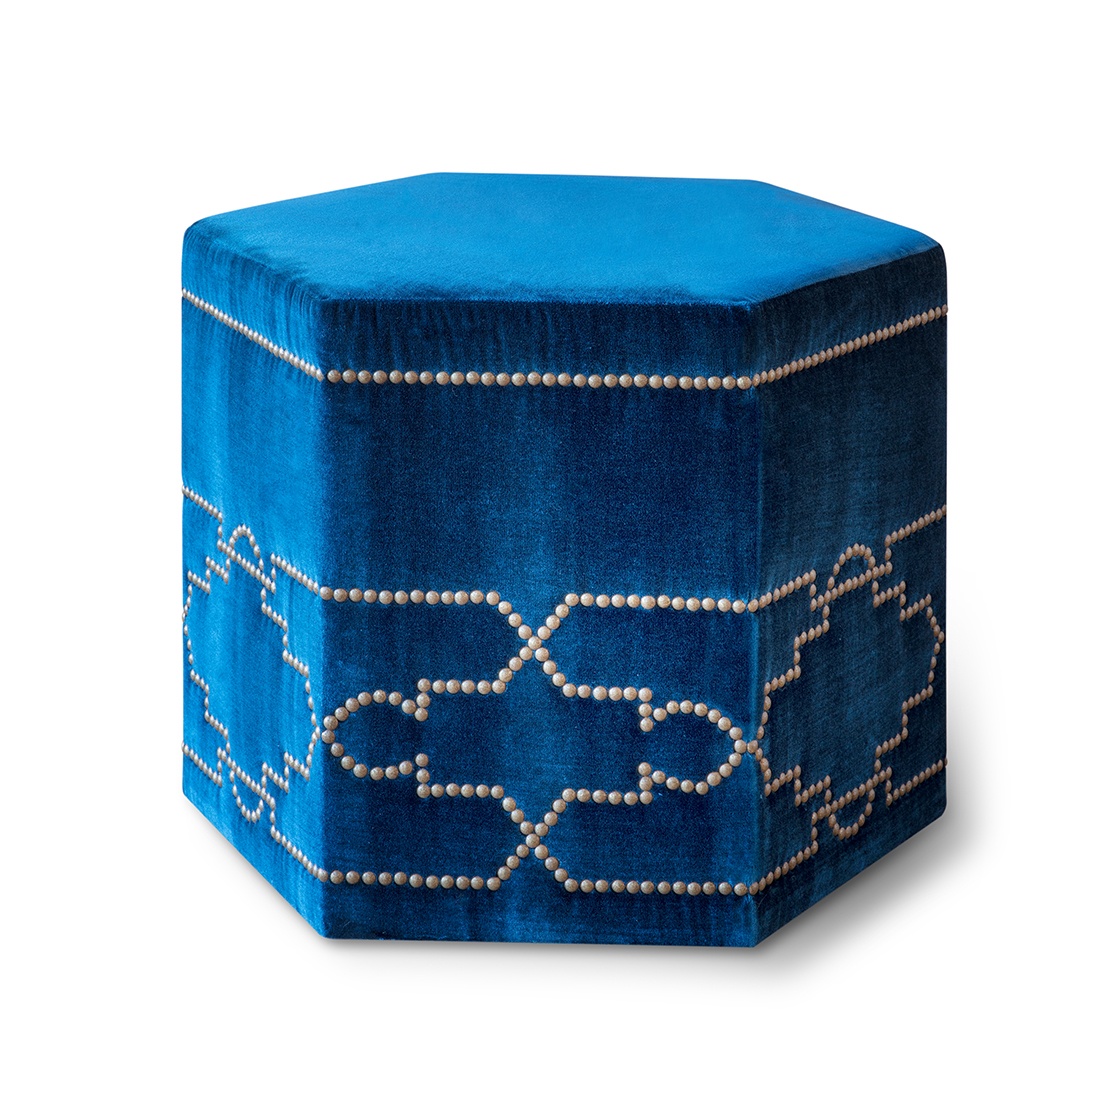 Malika footstool in Capri silk velvet - Prussian blue - Beaumont & Fletcher